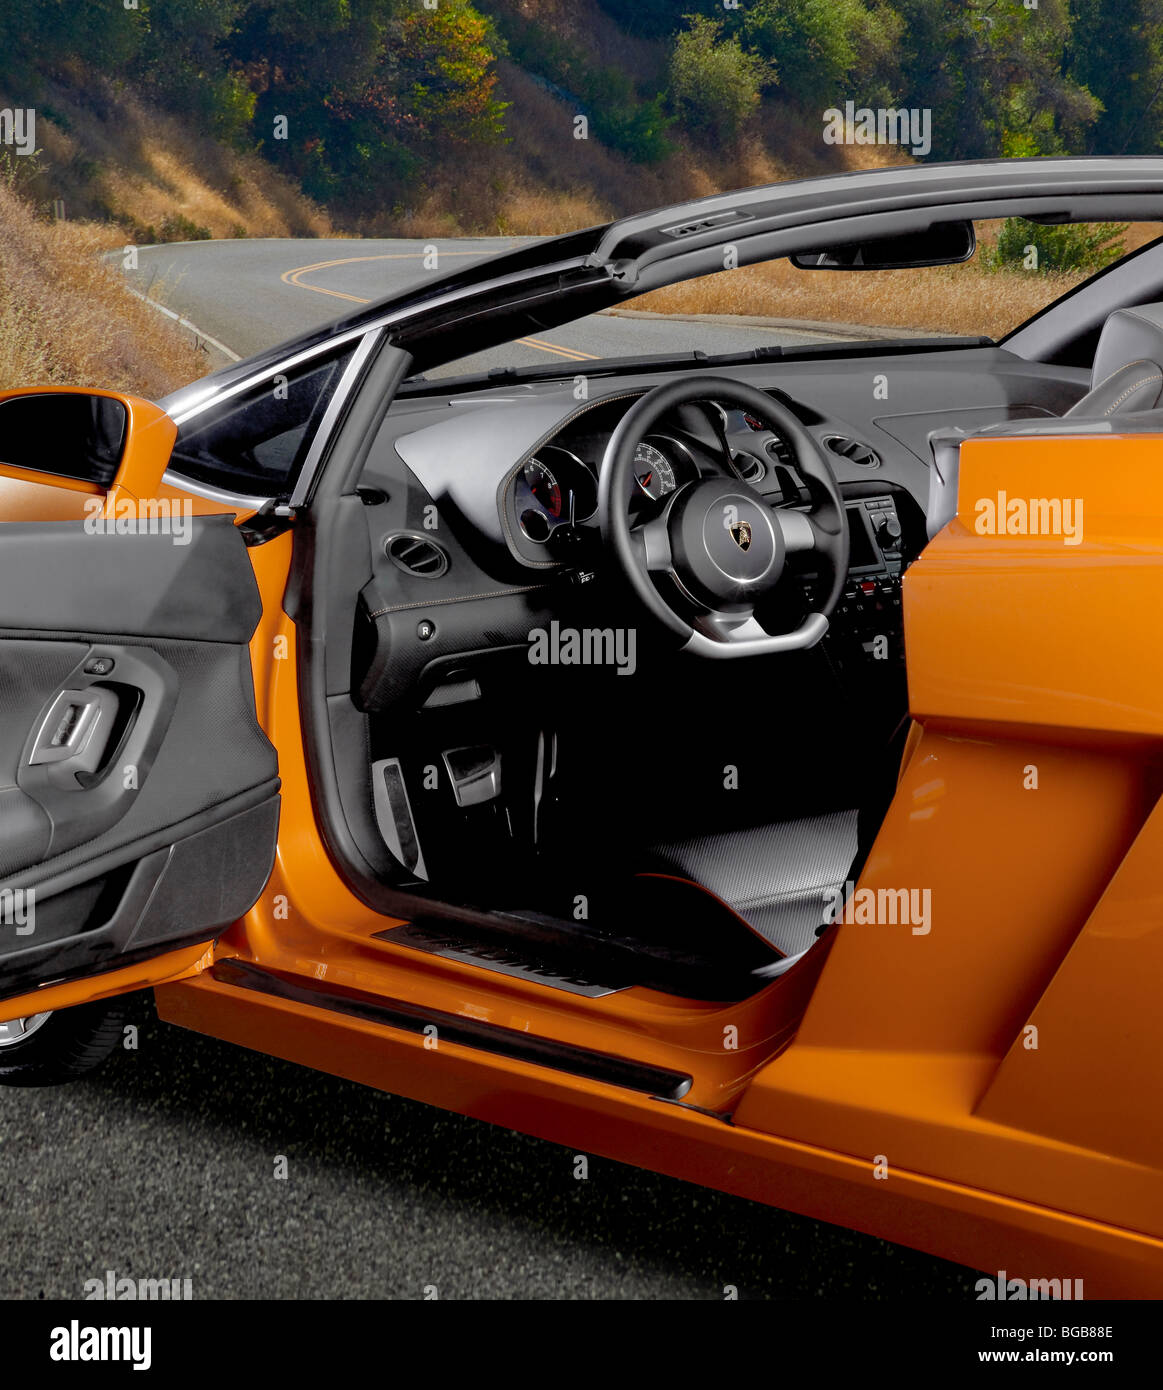 Lamborghini-Cabrio-Innenraum unterwegs mit Tür öffnen, USA Stockfoto